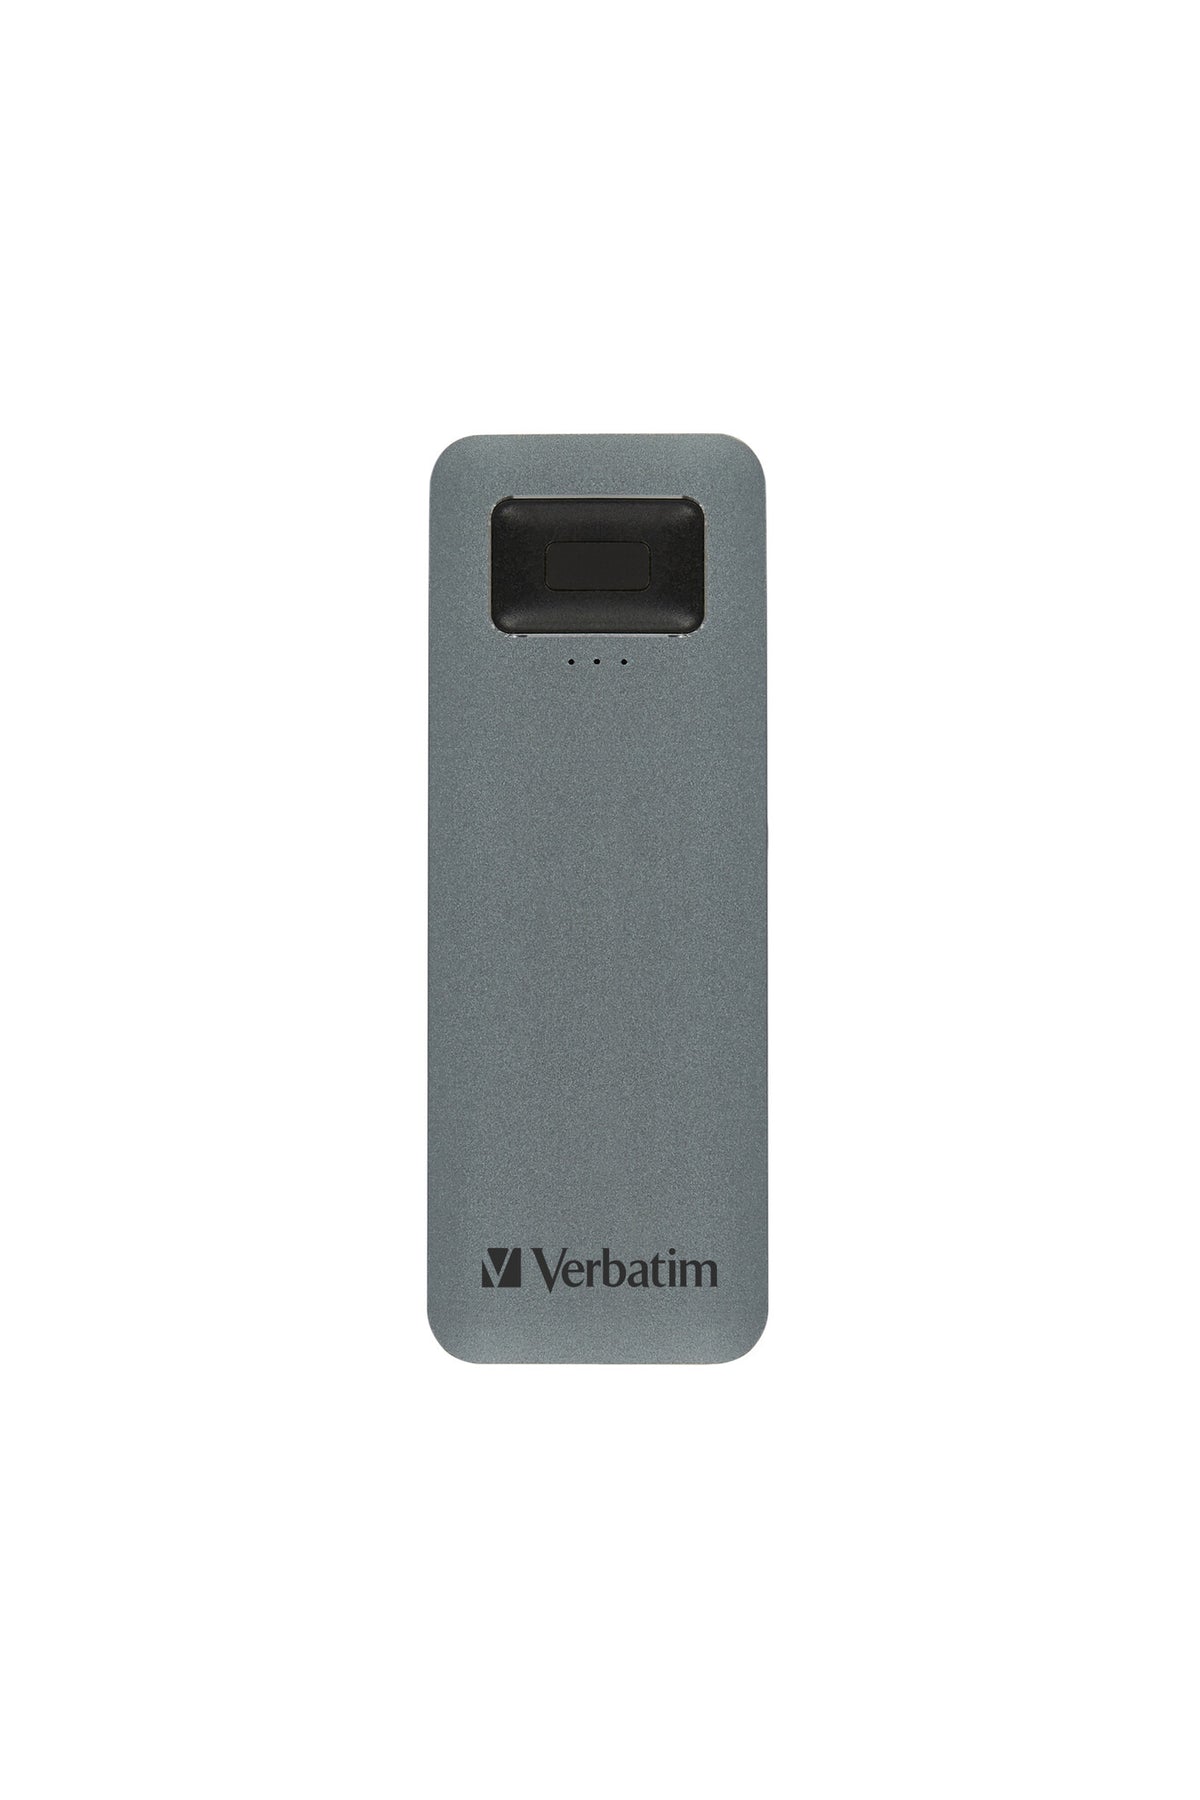 Verbatim Executive Fingerprint Secure - USB 3.1 Gen 1 External SSD - 512 GB